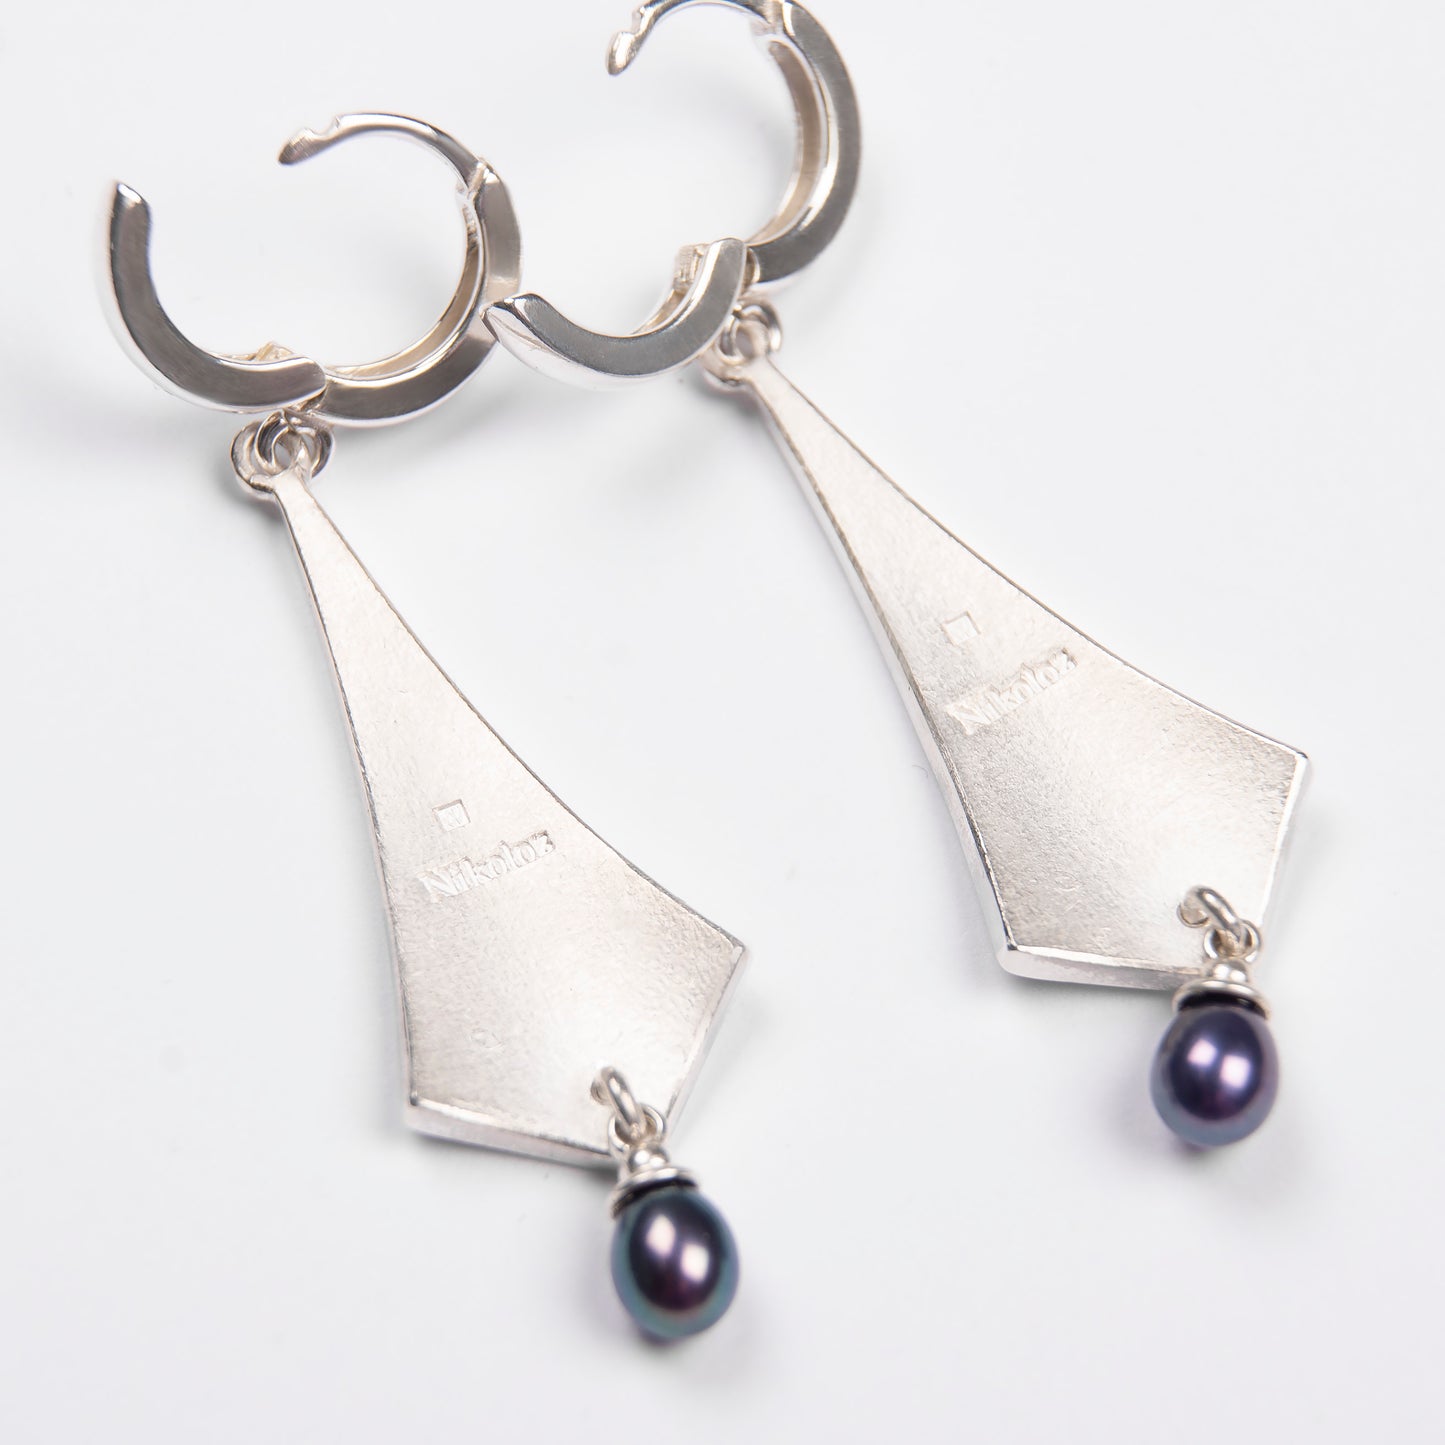 Cloisonné Enamel, Deep Violet Earrings With Peacock Pearls